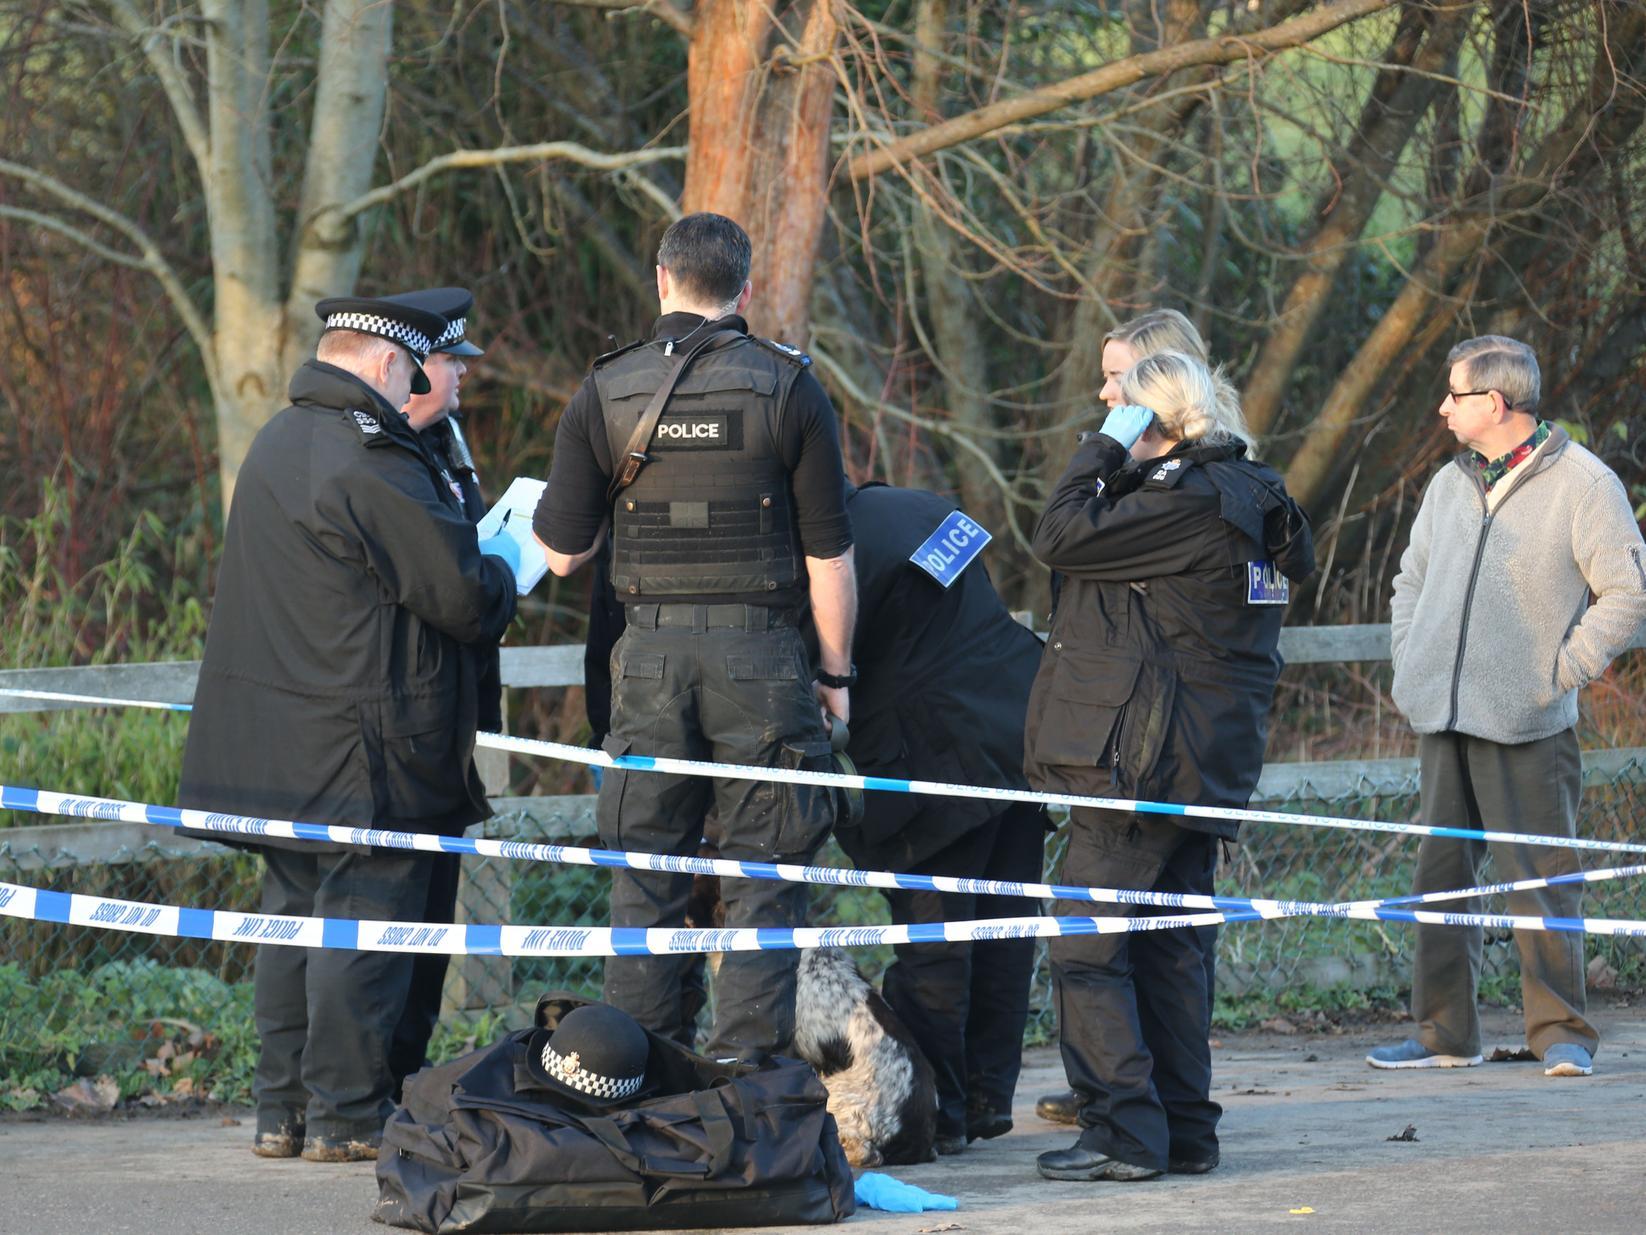 The scene of the incident in Horsham Park